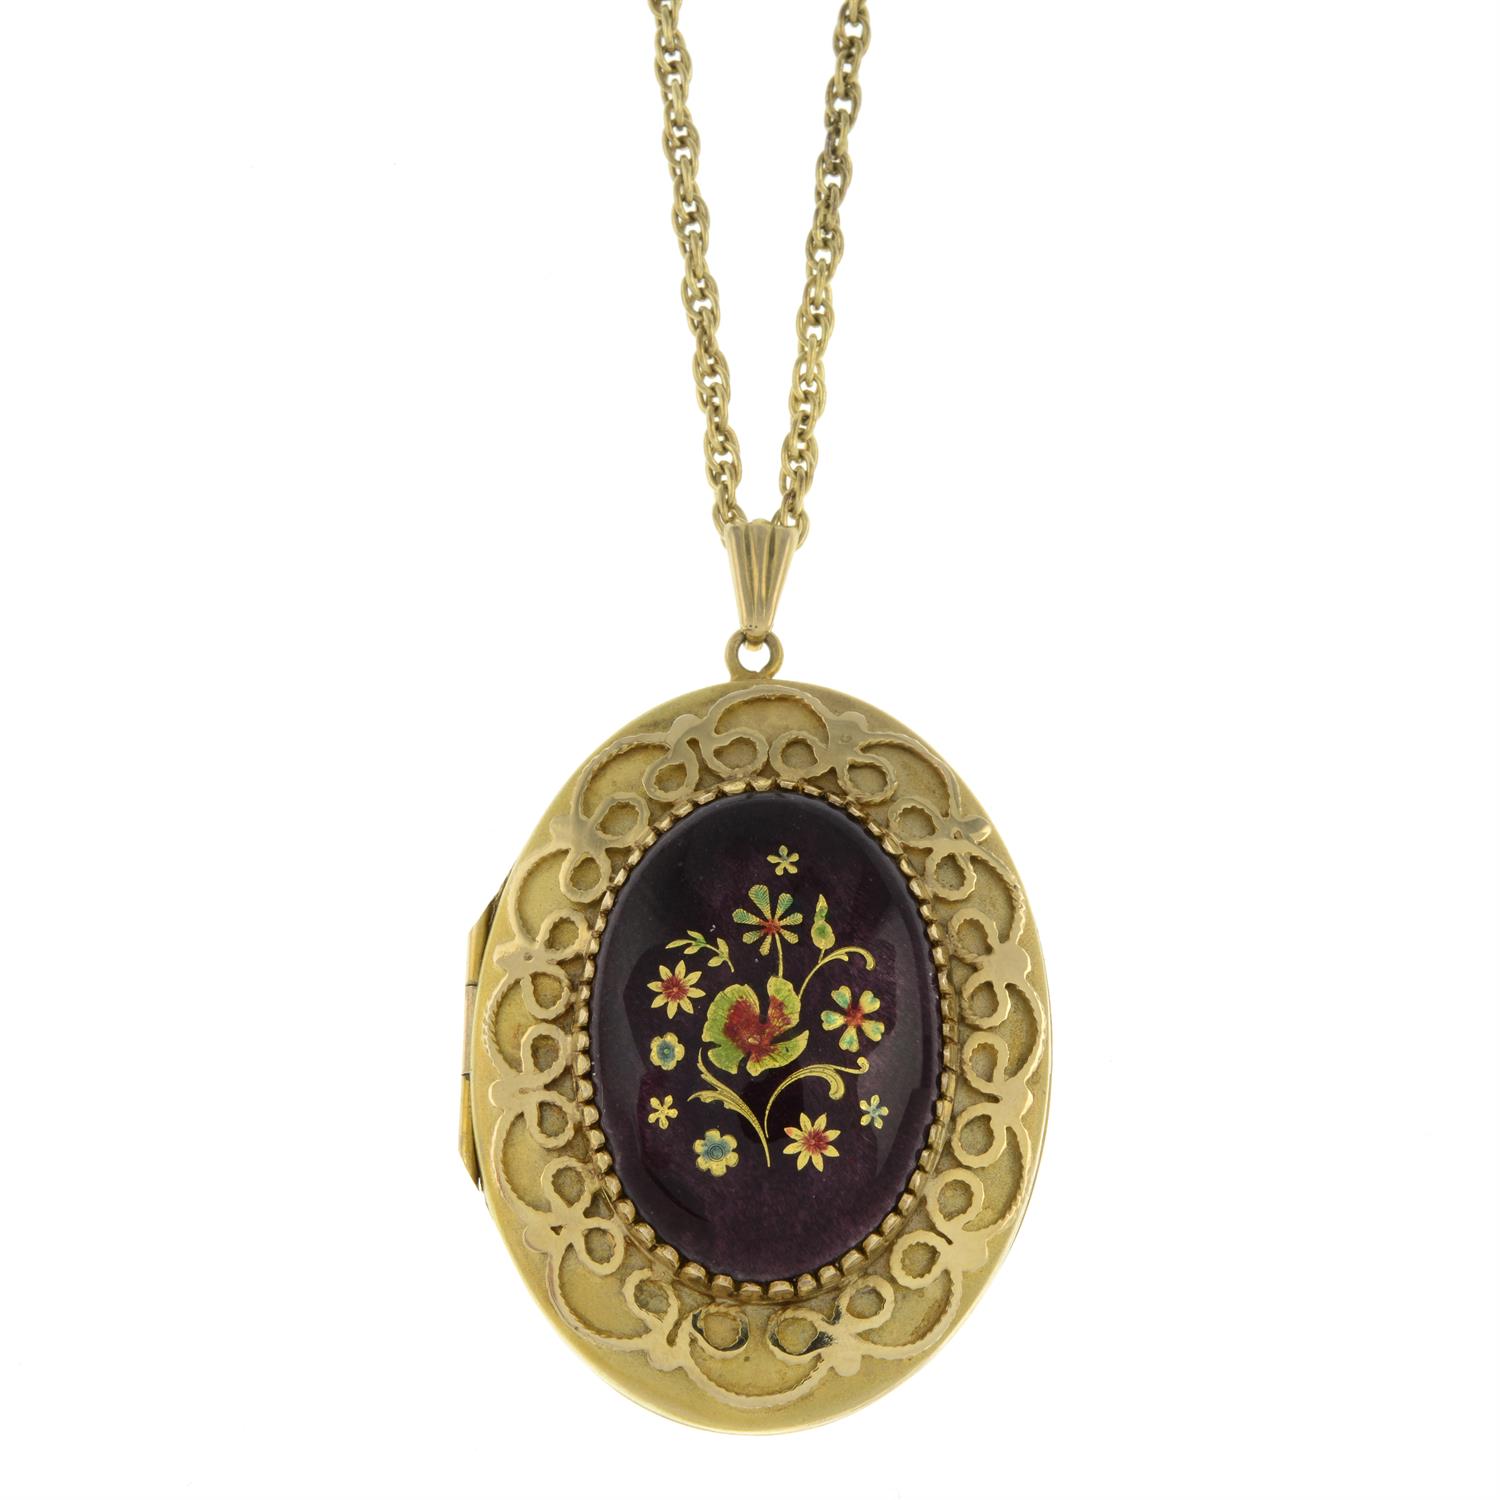 9ct gold enamel locket pendant & chain - Image 3 of 3